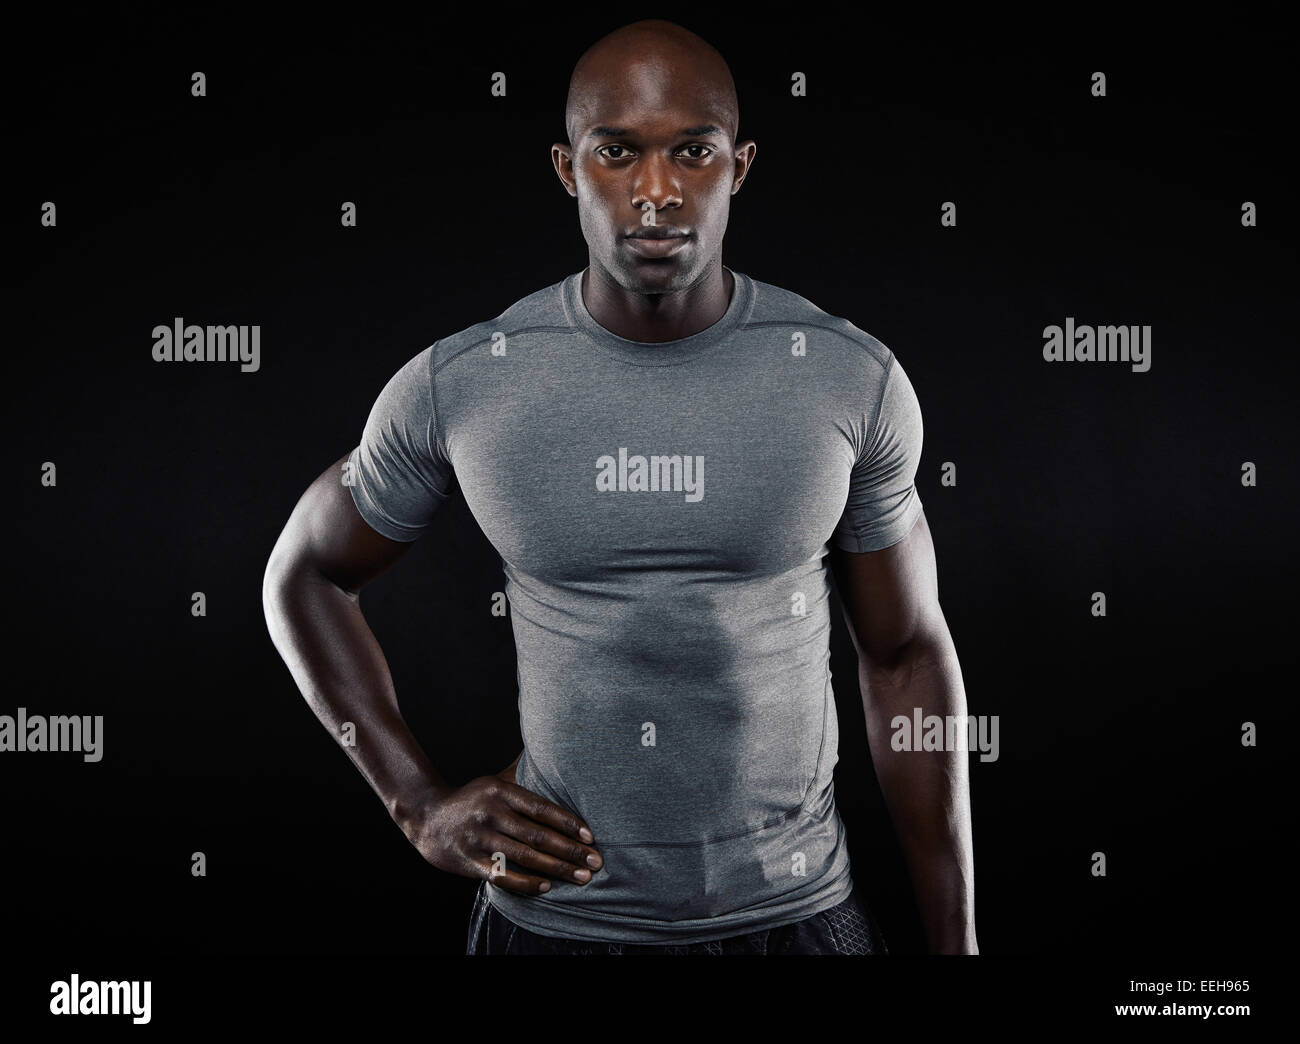 Portrait of muscular young man in sportswear looking at camera sur fond noir. Les pays africains qui pose l'athlète confiant Banque D'Images